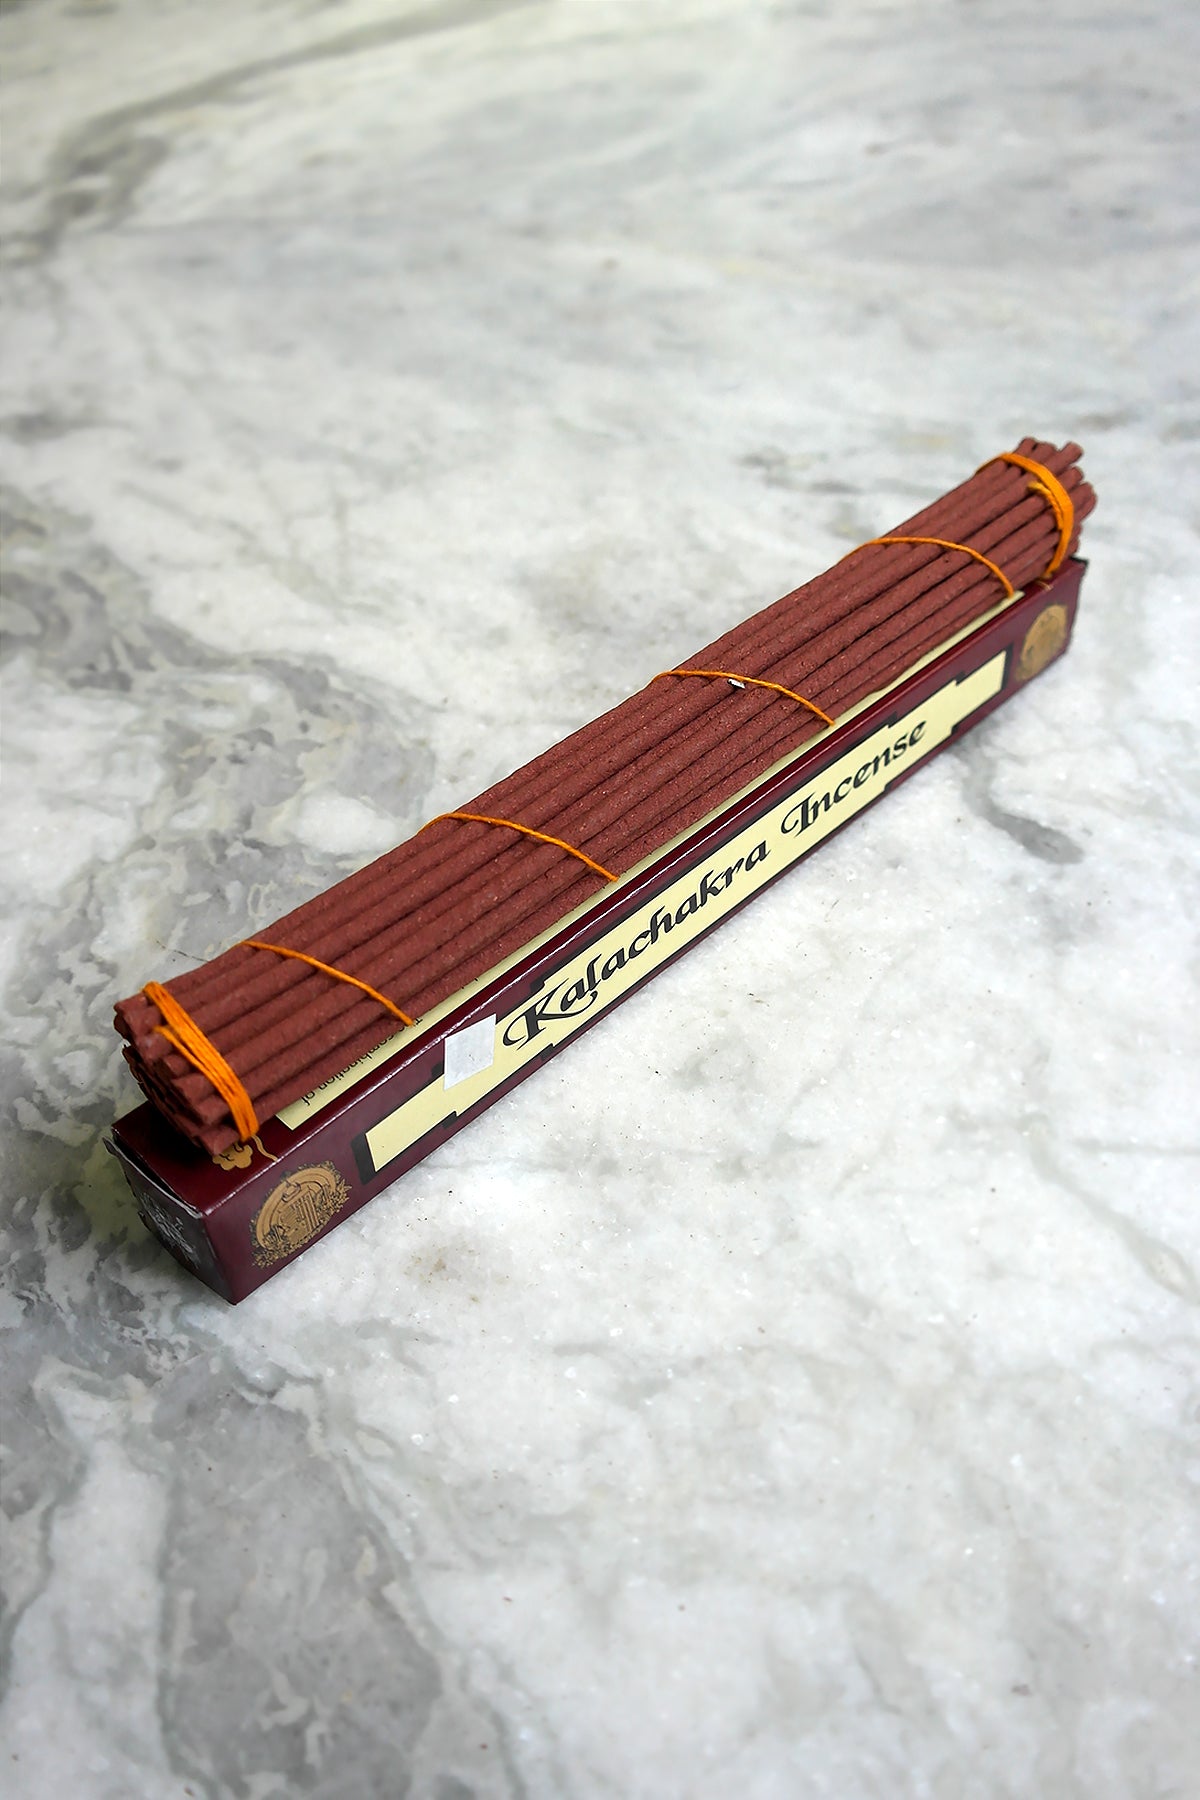 Tibetan Kalachakra traditional Incense Sticks, pure natural Tibetan incense